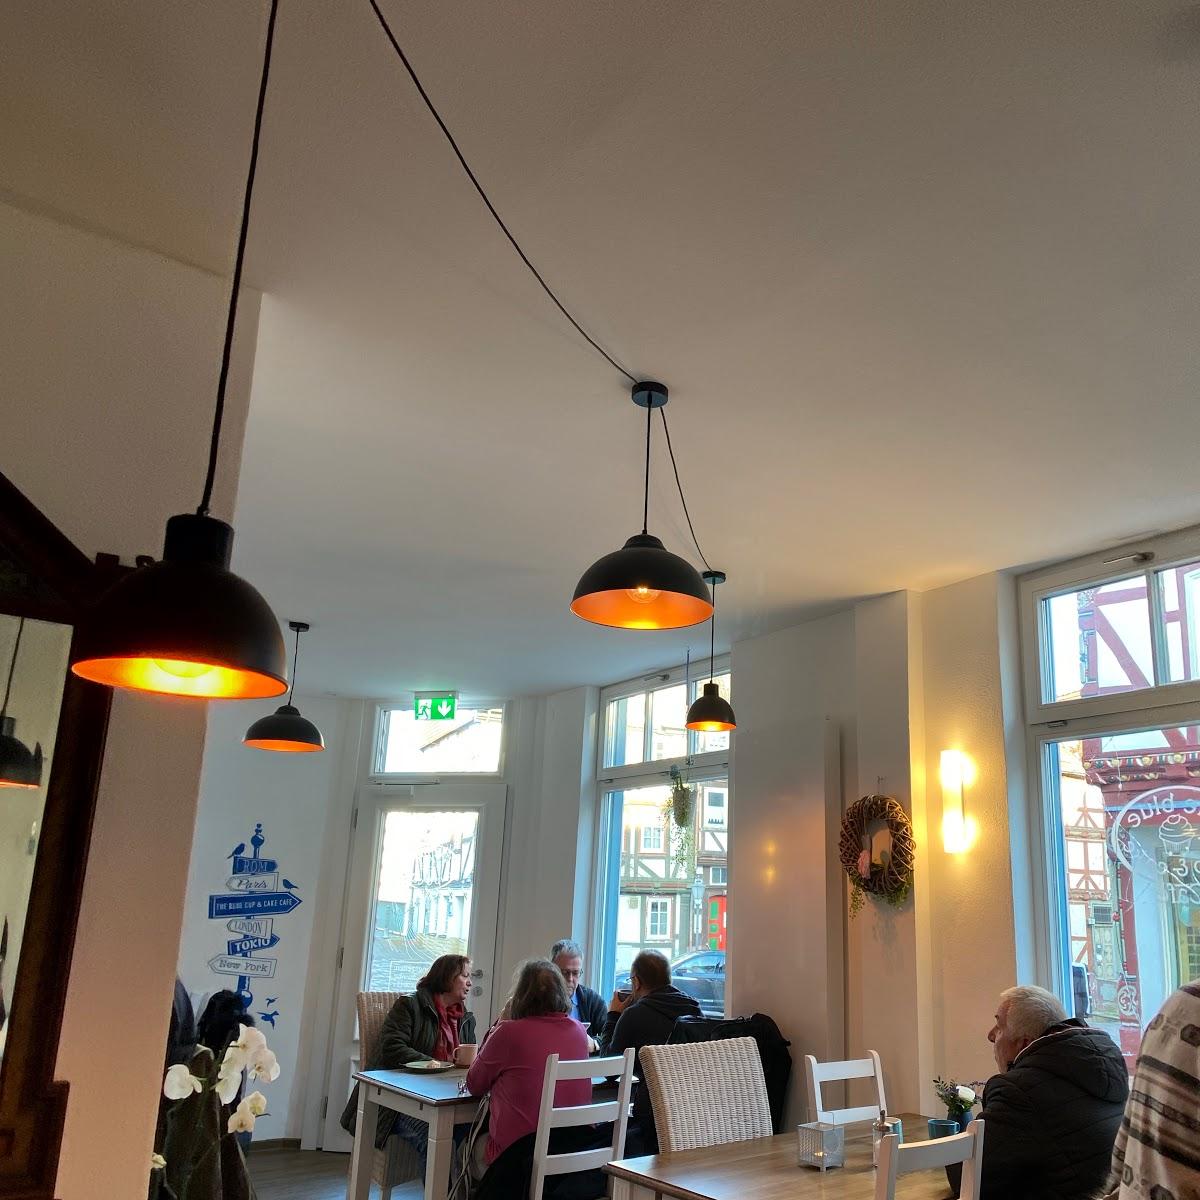 Restaurant "The blue Cup & Cake Café" in Rotenburg an der Fulda